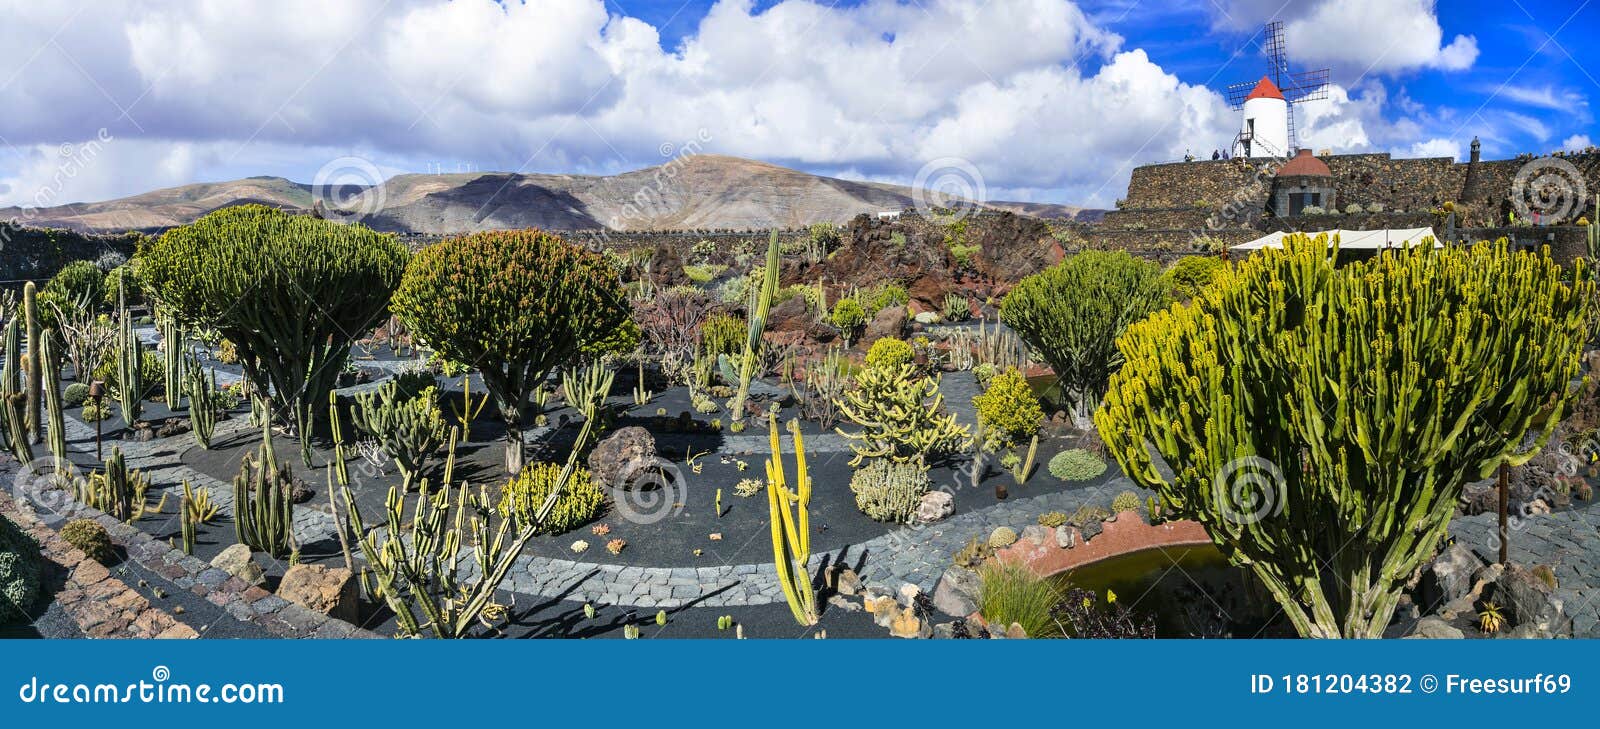 lanzarote island - botanical cactus garden, popular attraction in canary islands